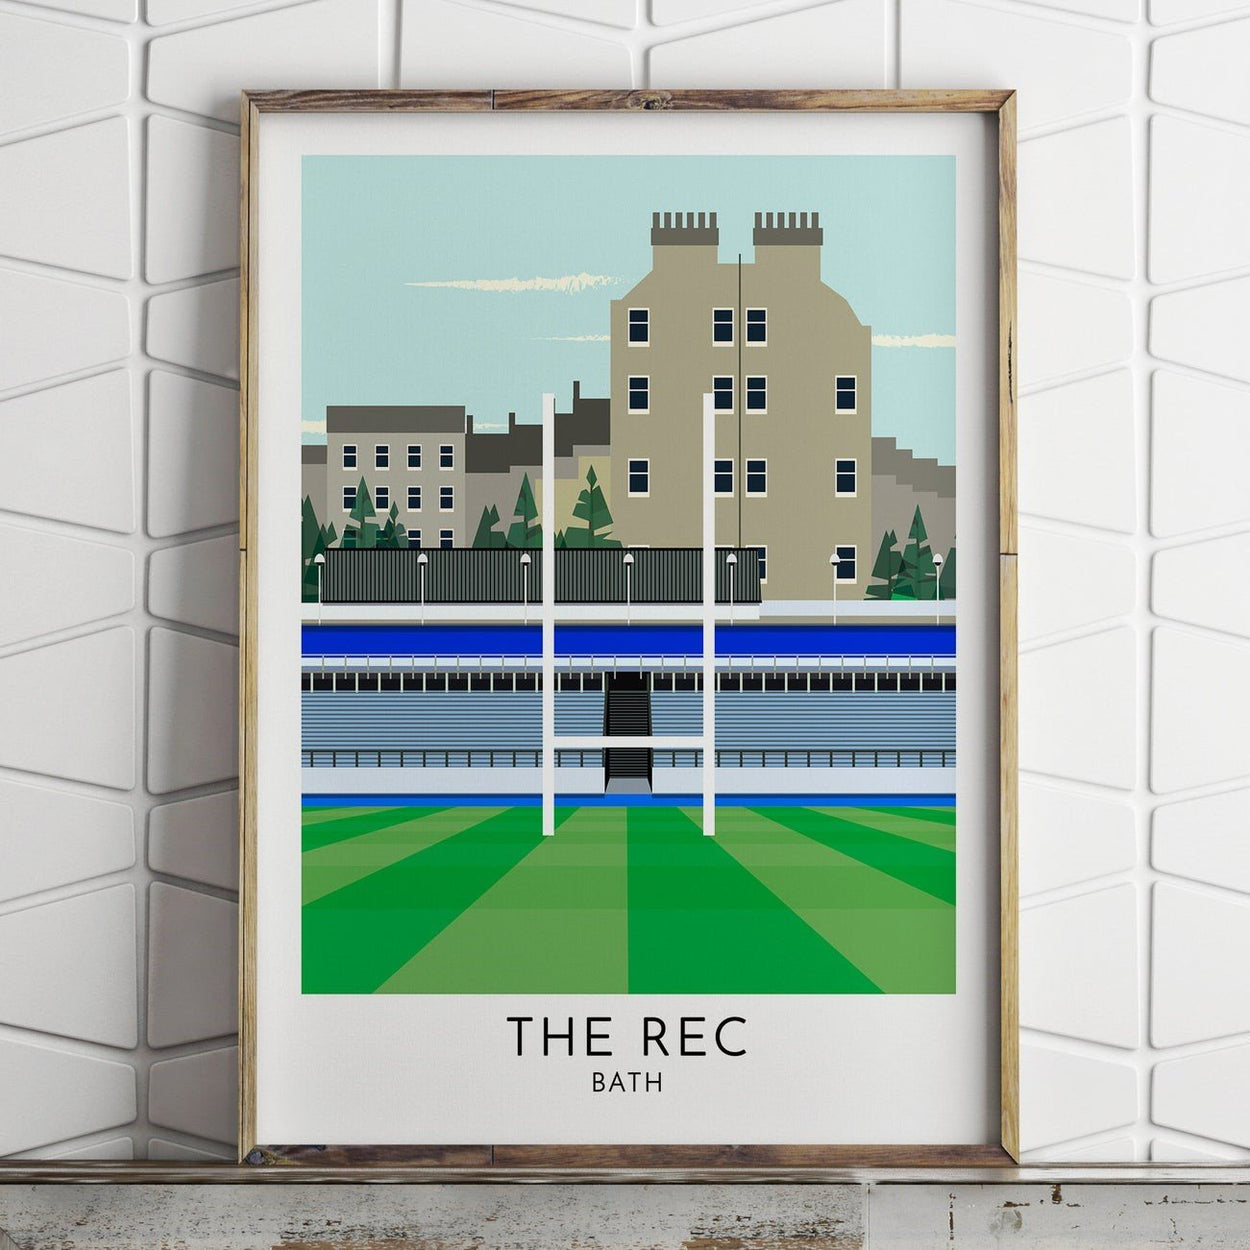 Bath Rugby: The Recreation Ground